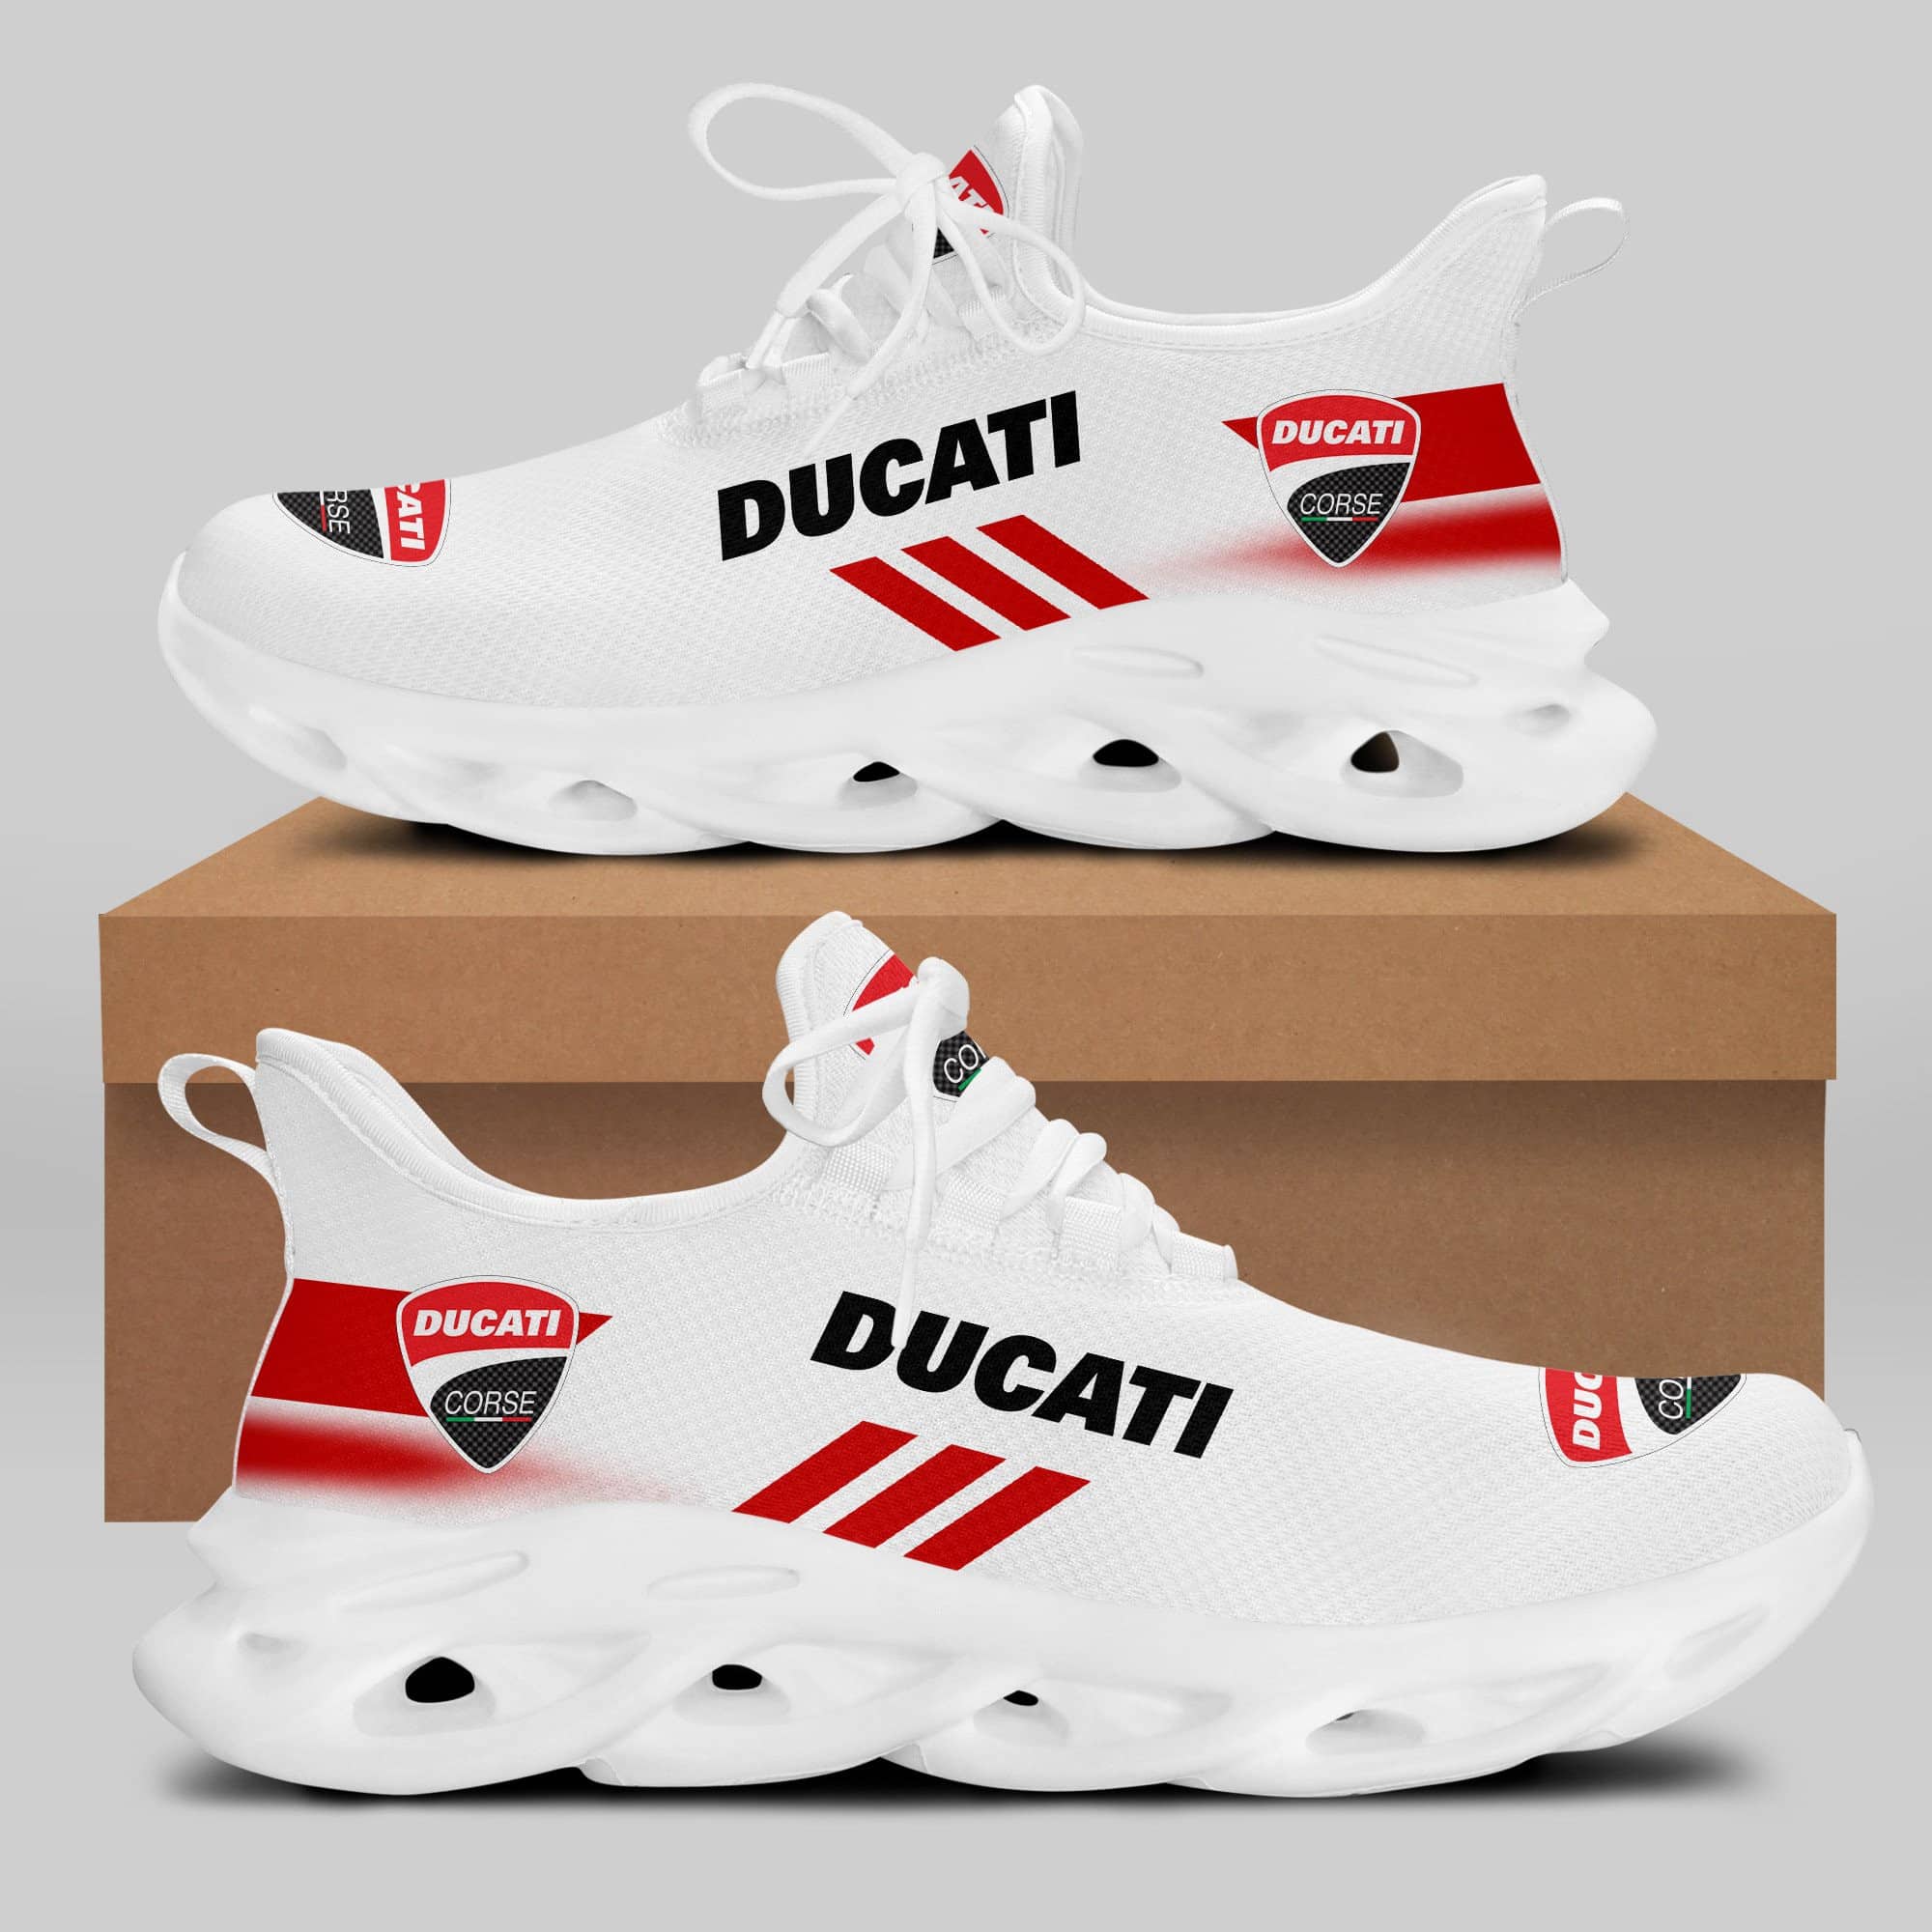 Ducati Racing Running Shoes Max Soul Shoes Sneakers Ver 28 1